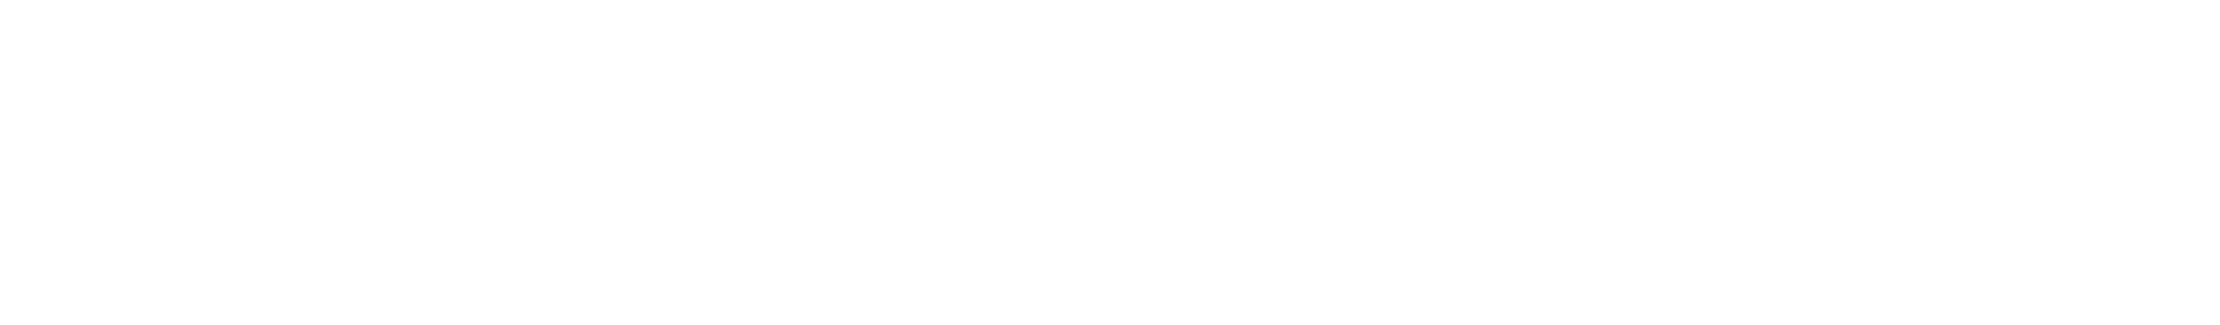 Terraformers_Logo_White_Union_Cosmos.png